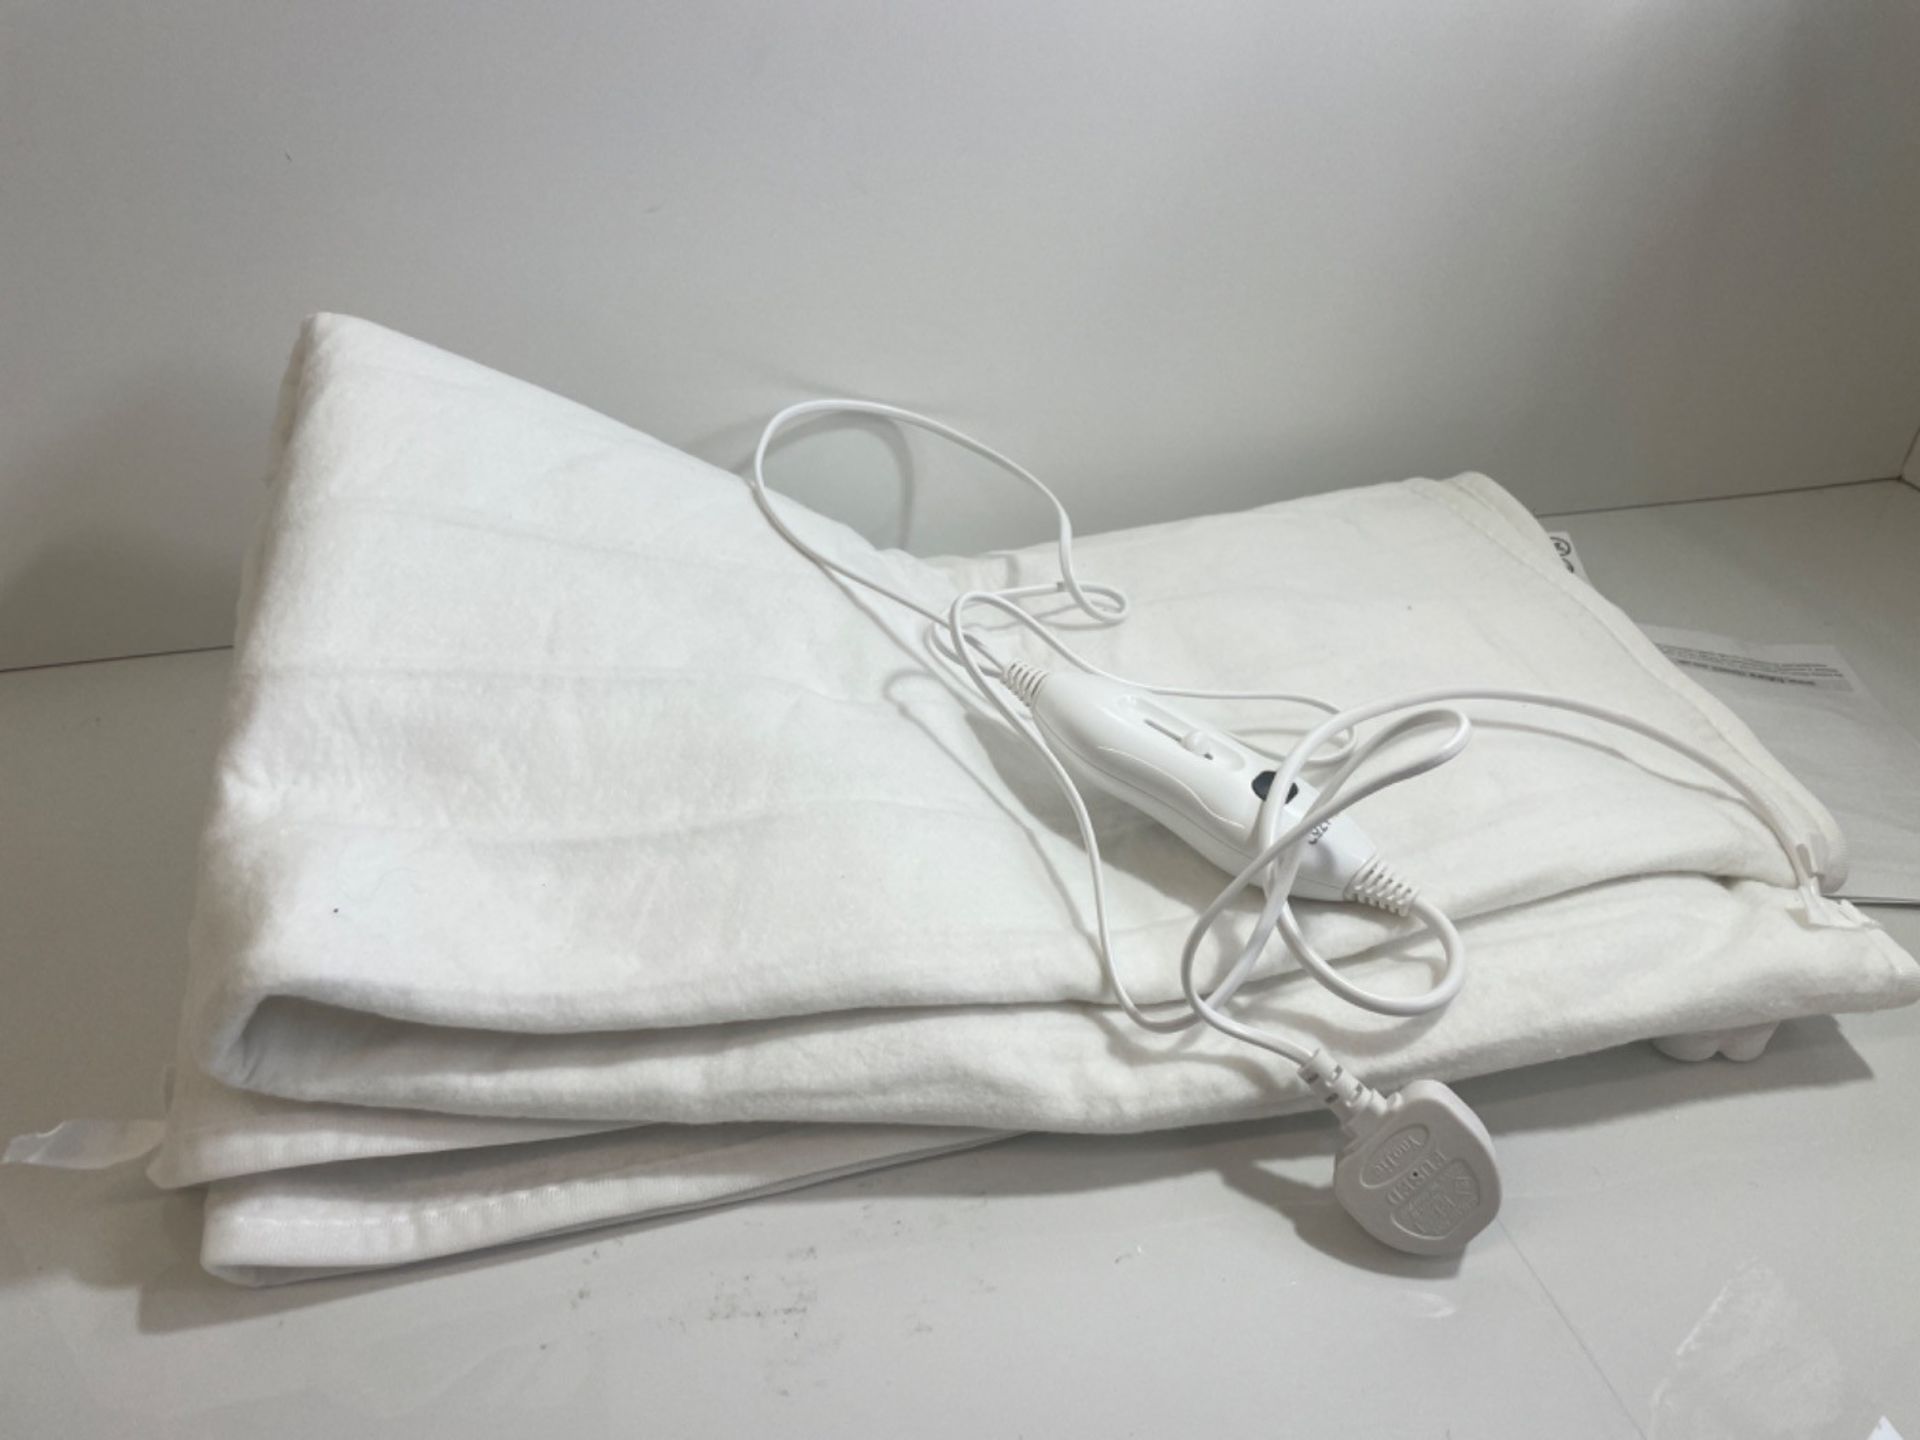 Cozytek Double Polyester Electric Blanket Size Detachable Control Underblanket 3 Heat Settings Whit - Image 2 of 3